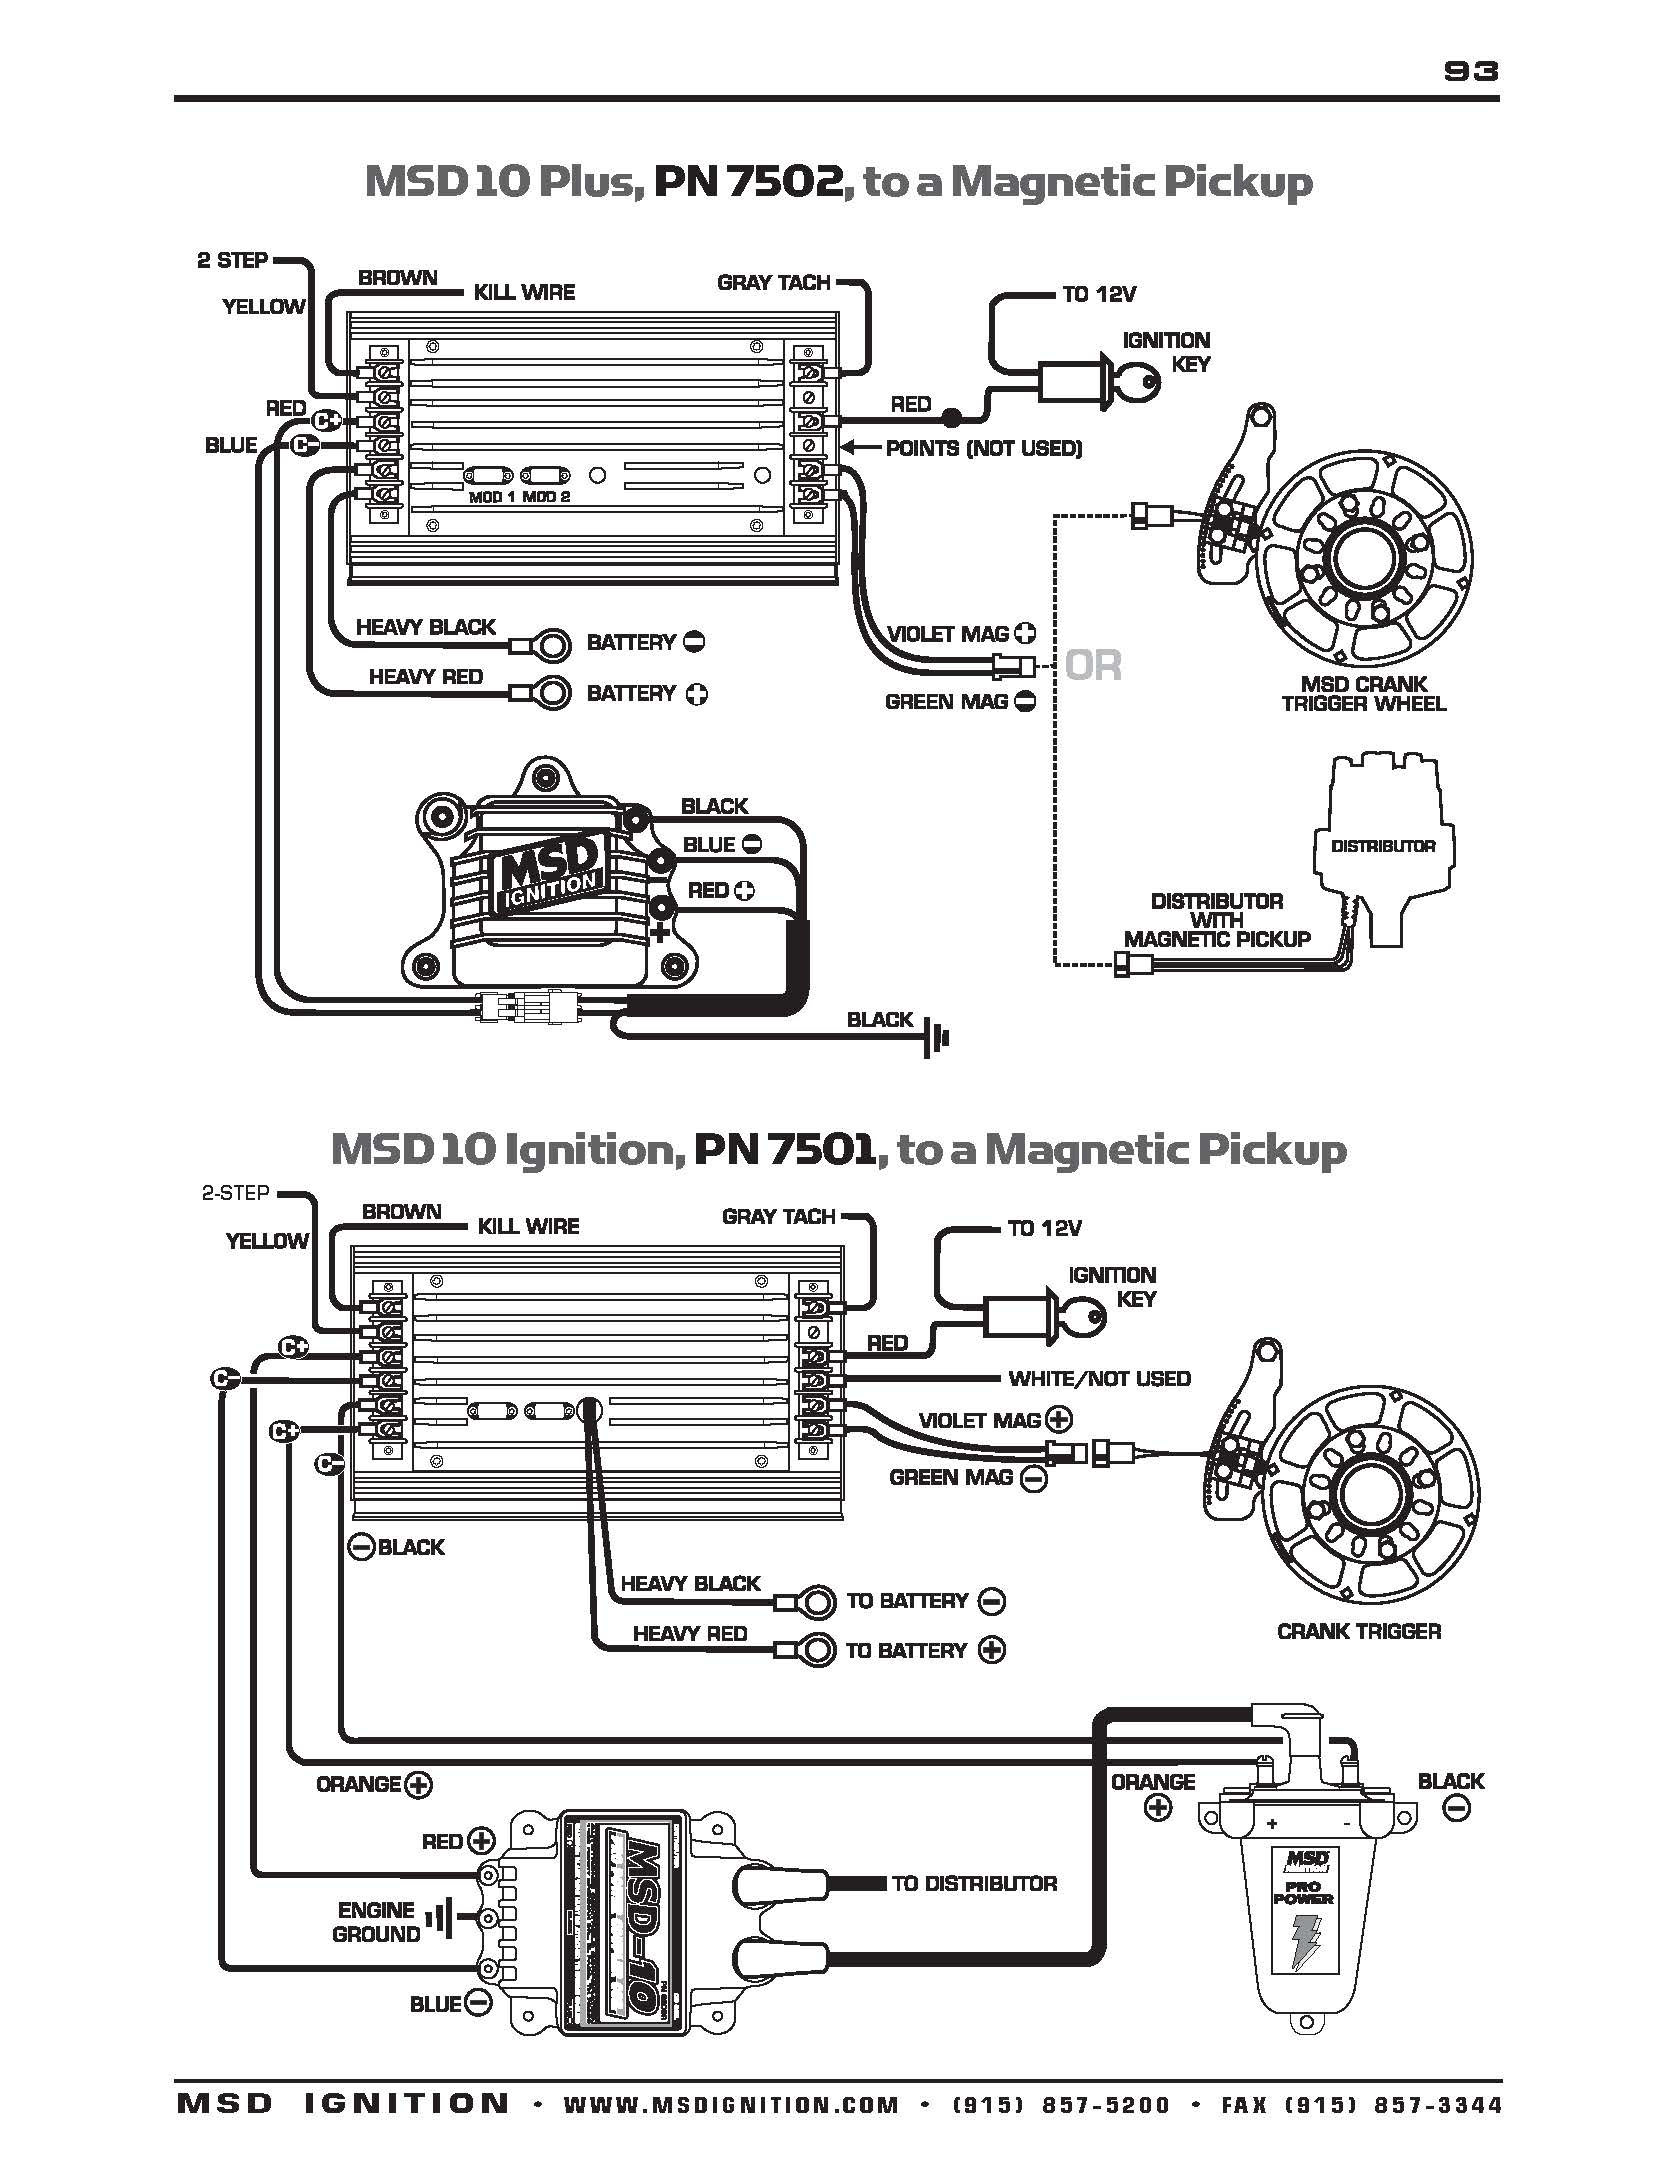 Ford Tfi Ignition Wiring Diagram | Wiring Library - Ford Ignition Control Module Wiring Diagram